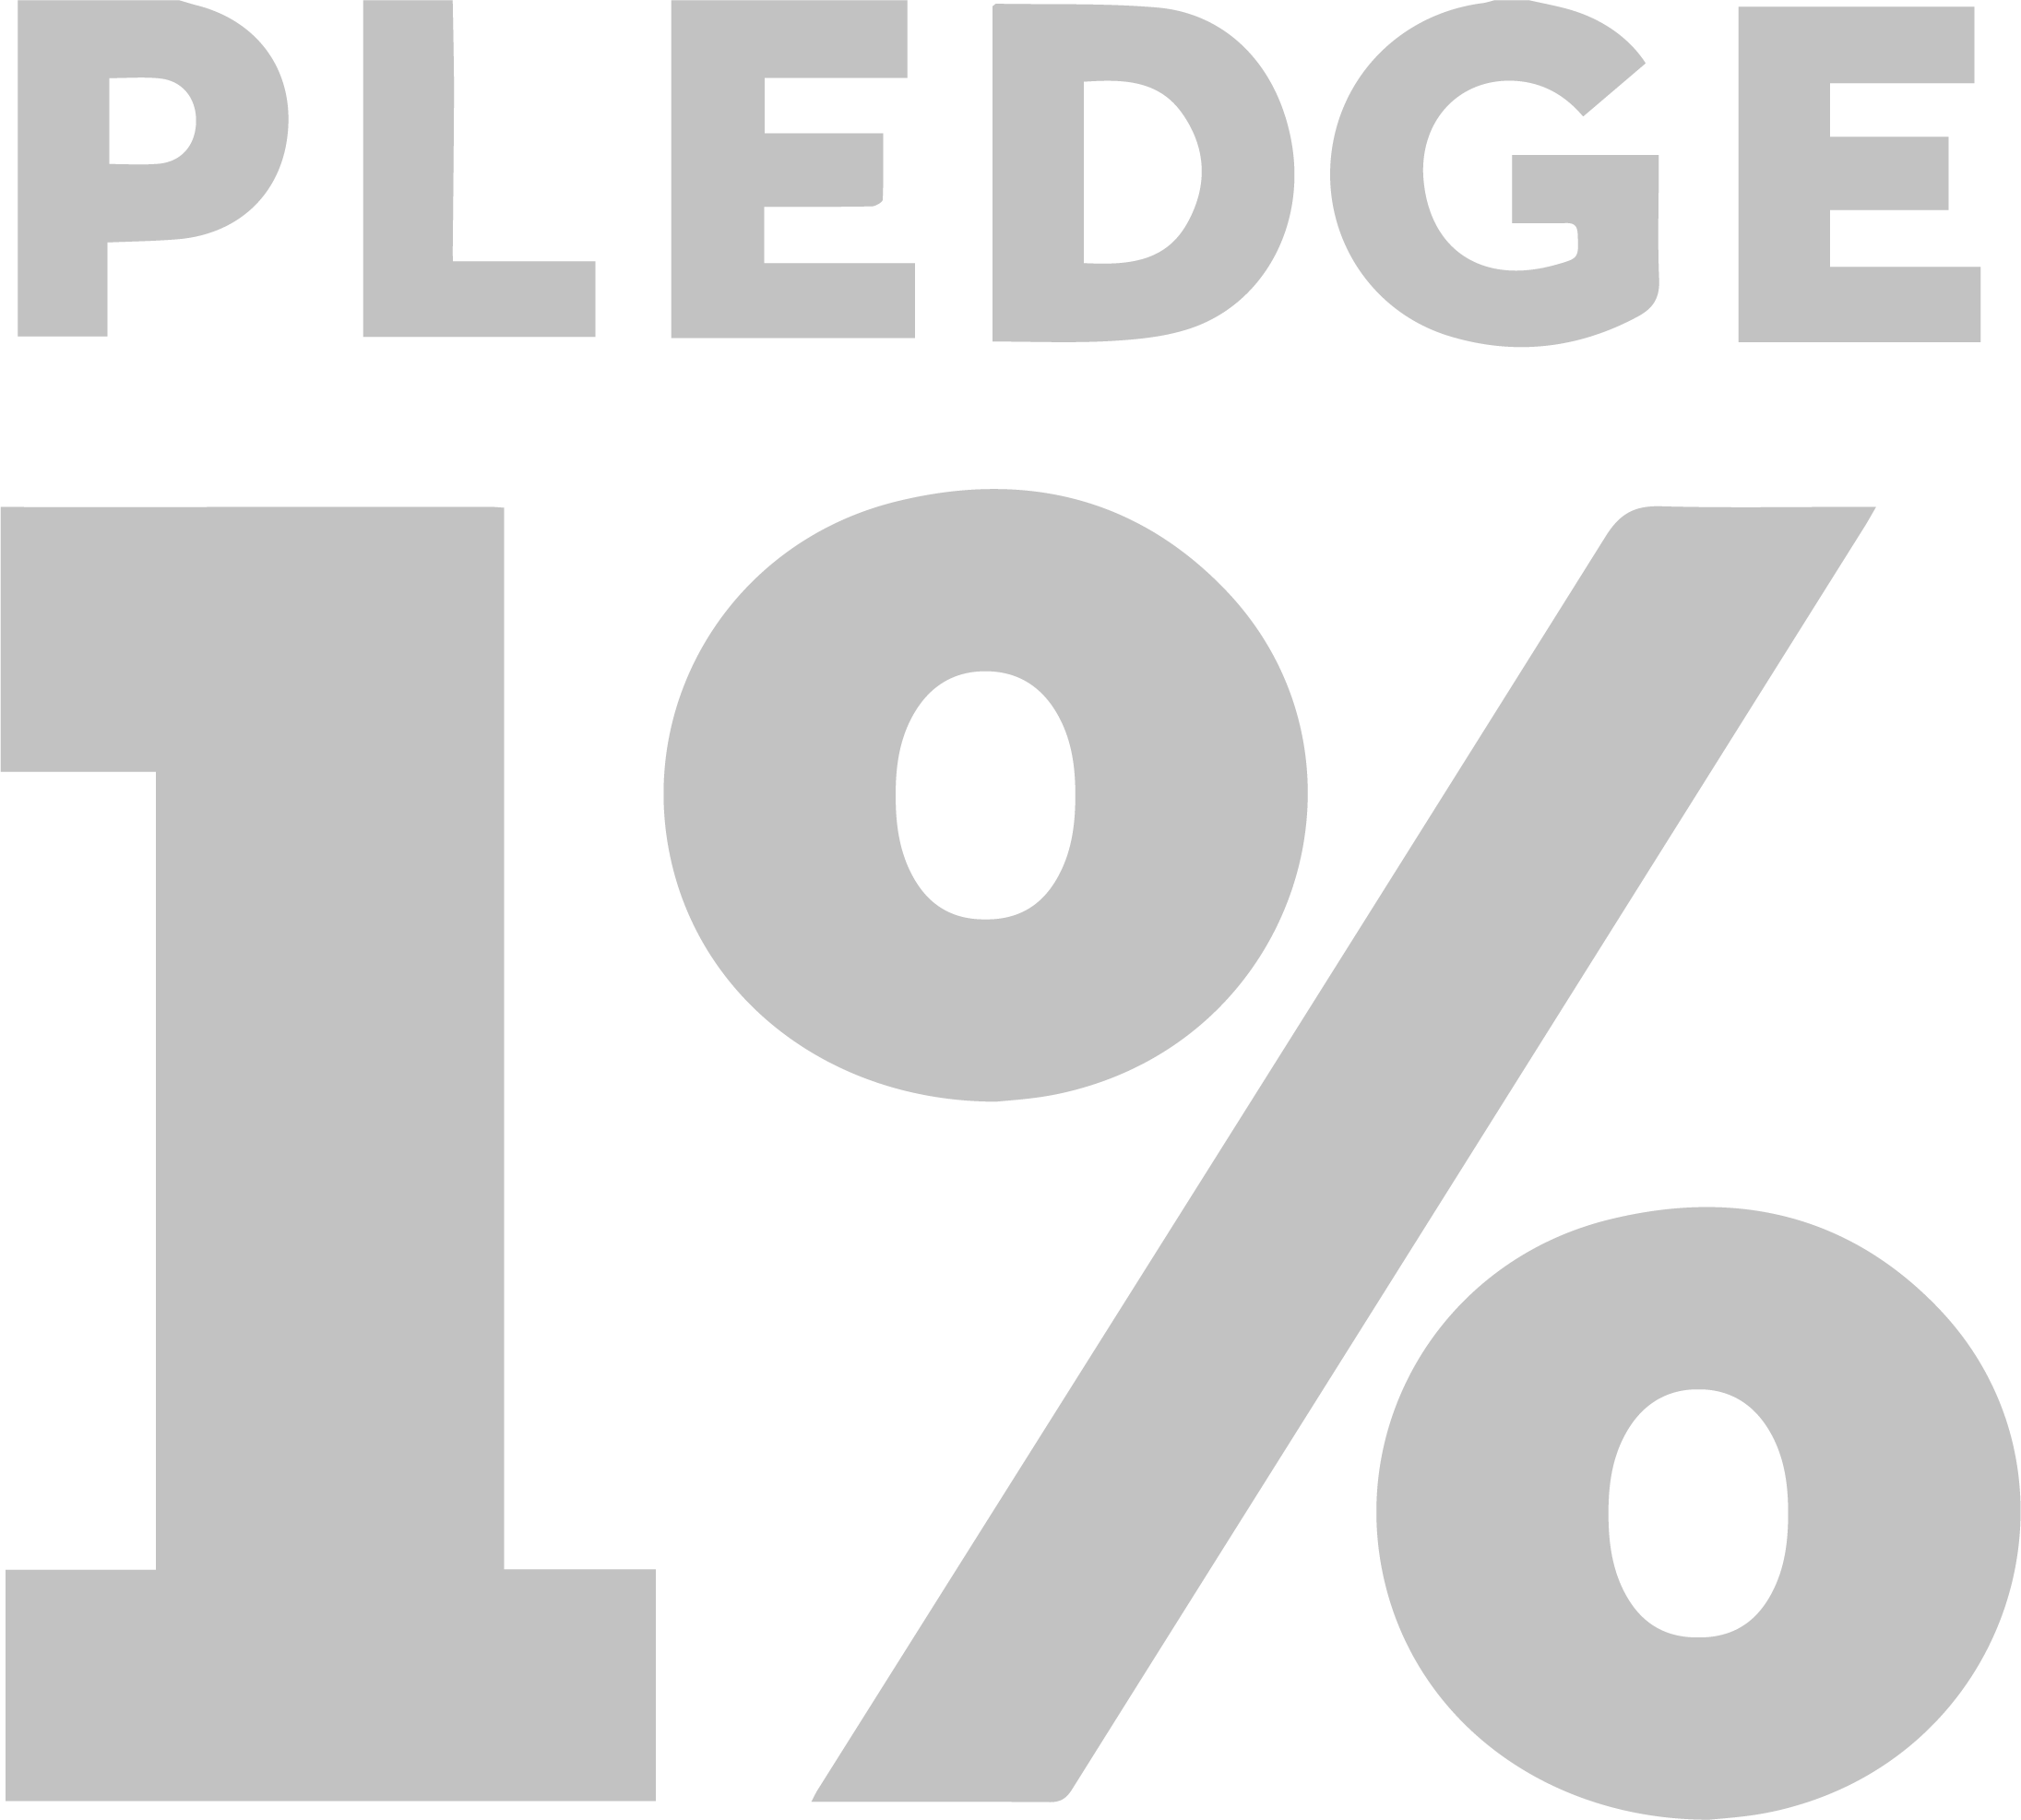 Pledge 1% Logo